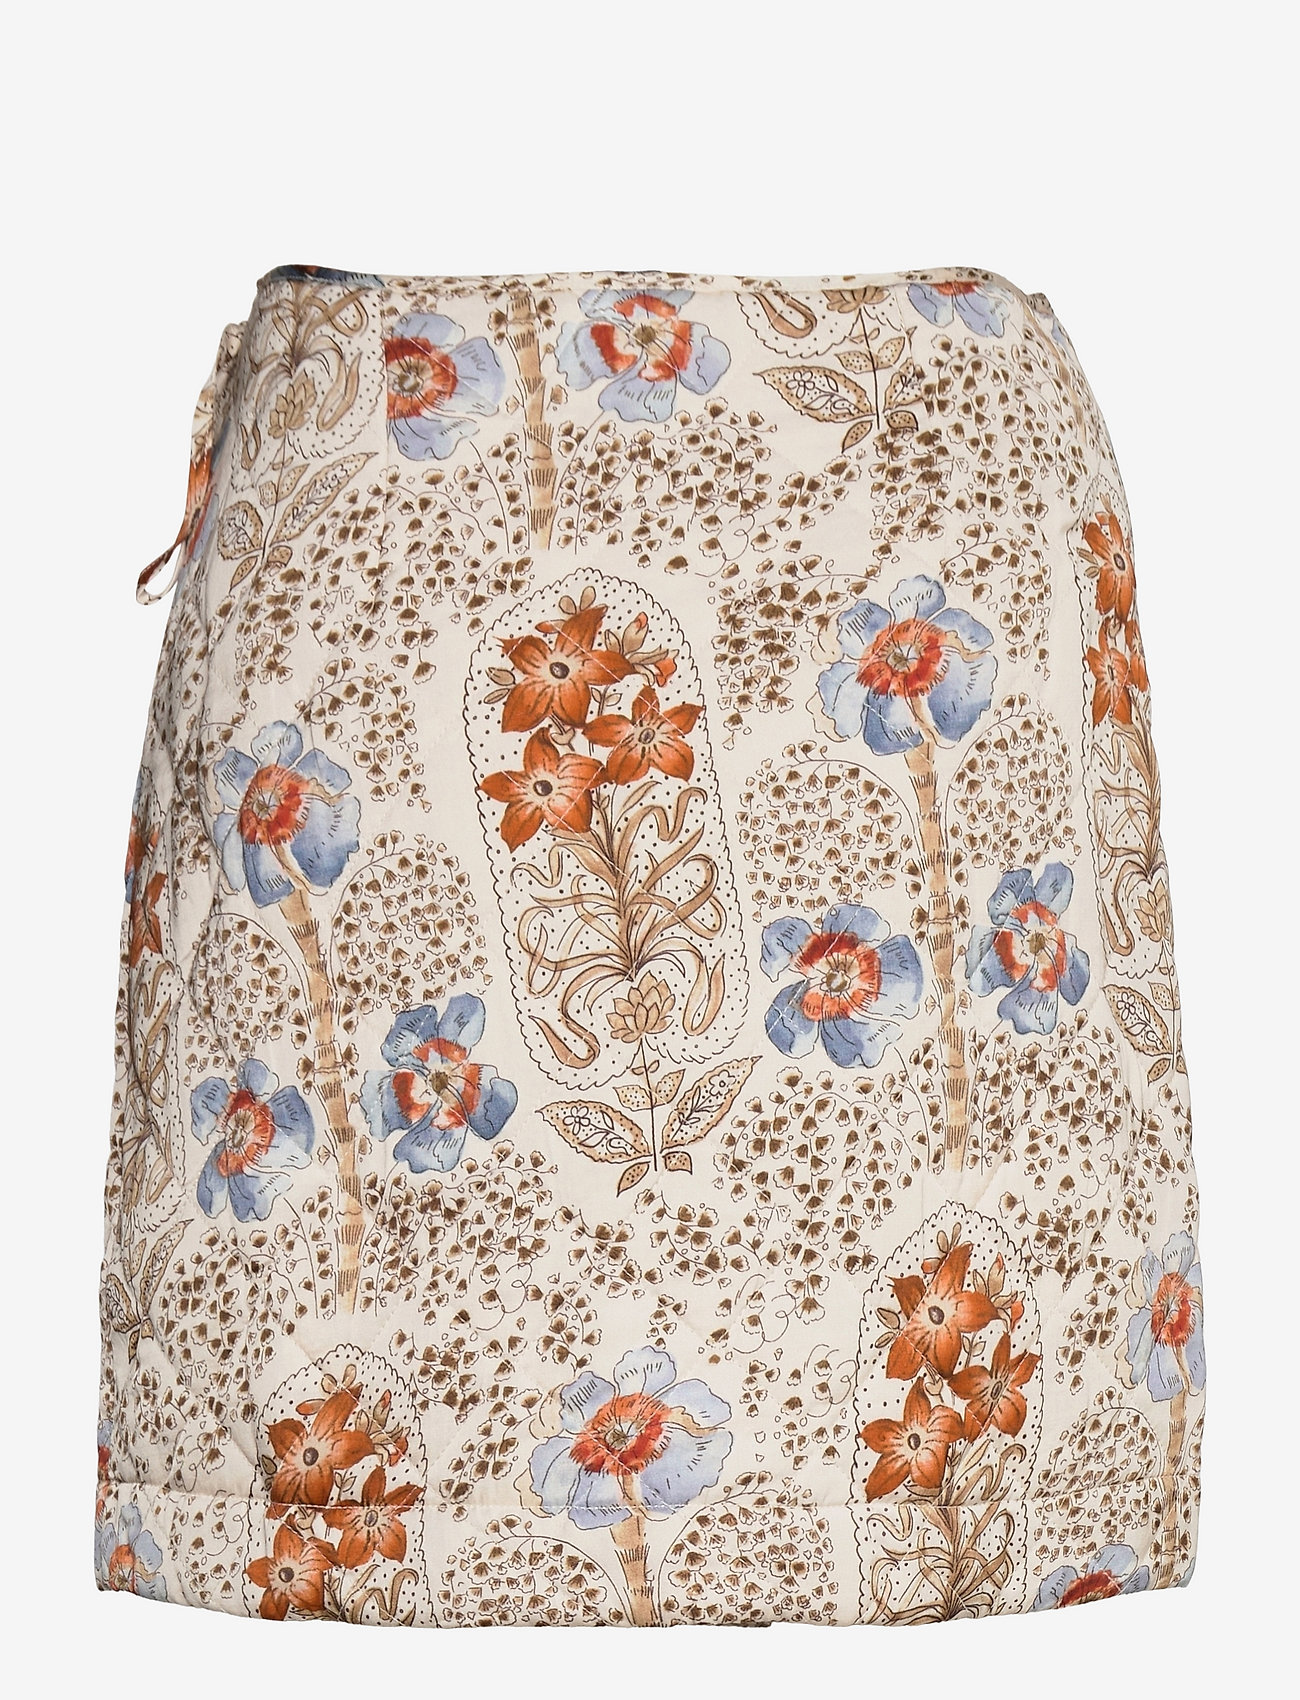 by Ti Mo - Autumn Drape Skirt - feestelijke kleding voor outlet-prijzen - vintage wallpaper - 1